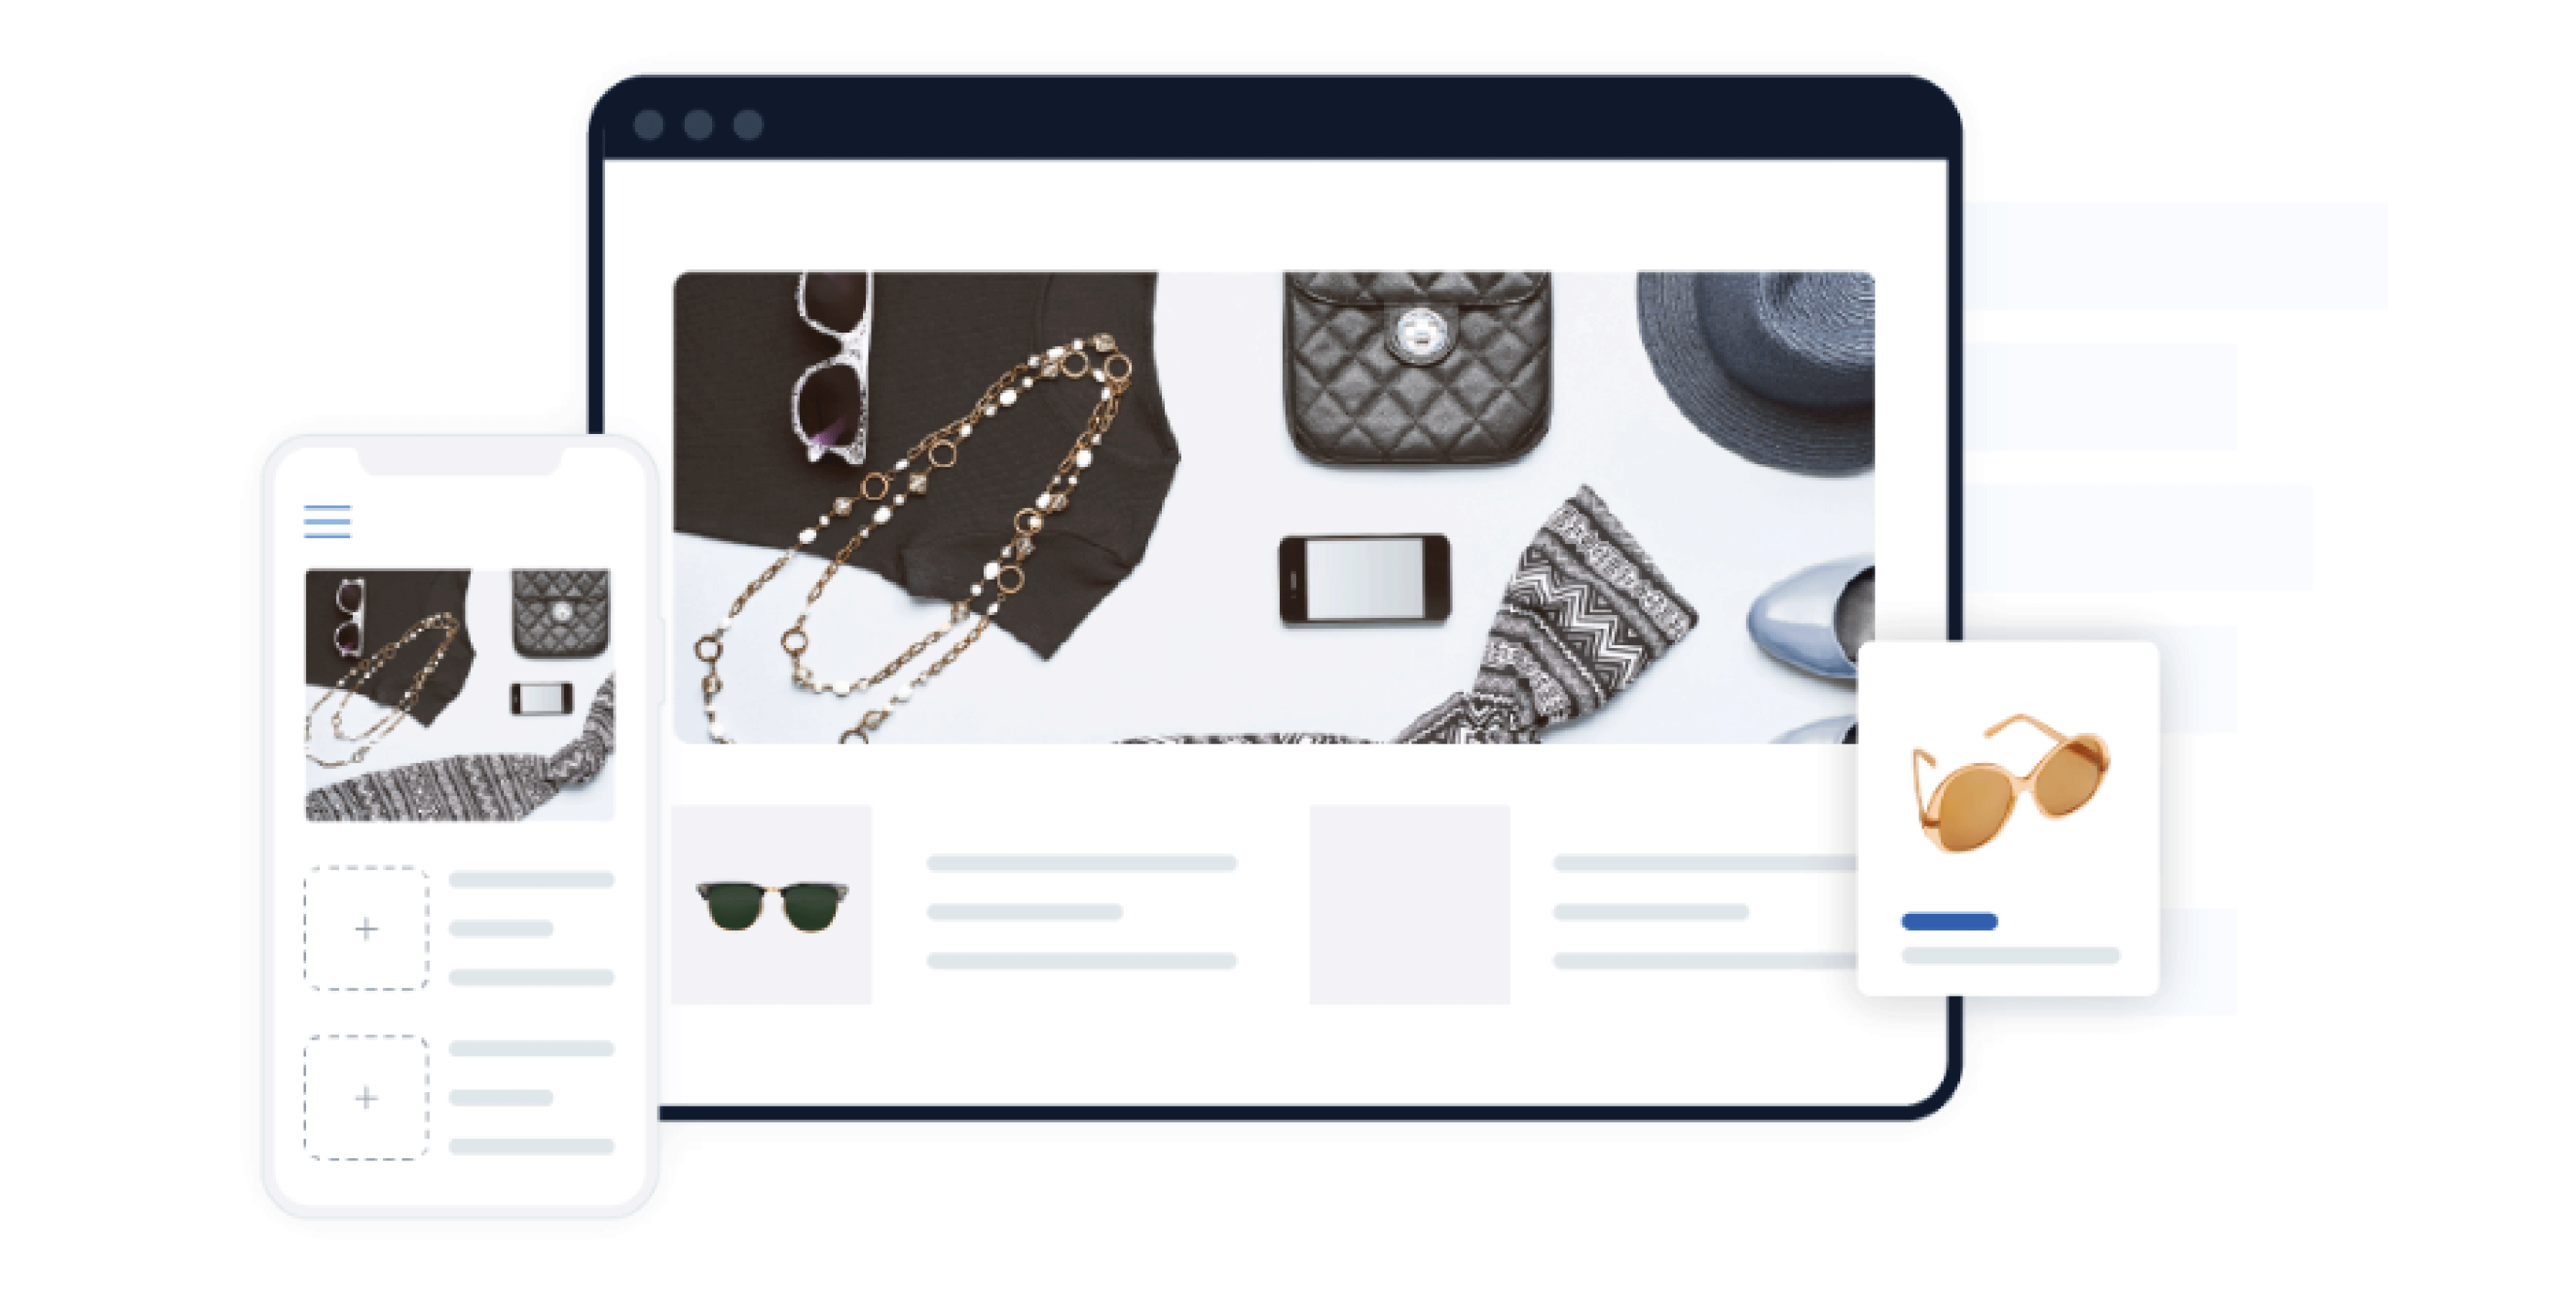 Shopline Web Design